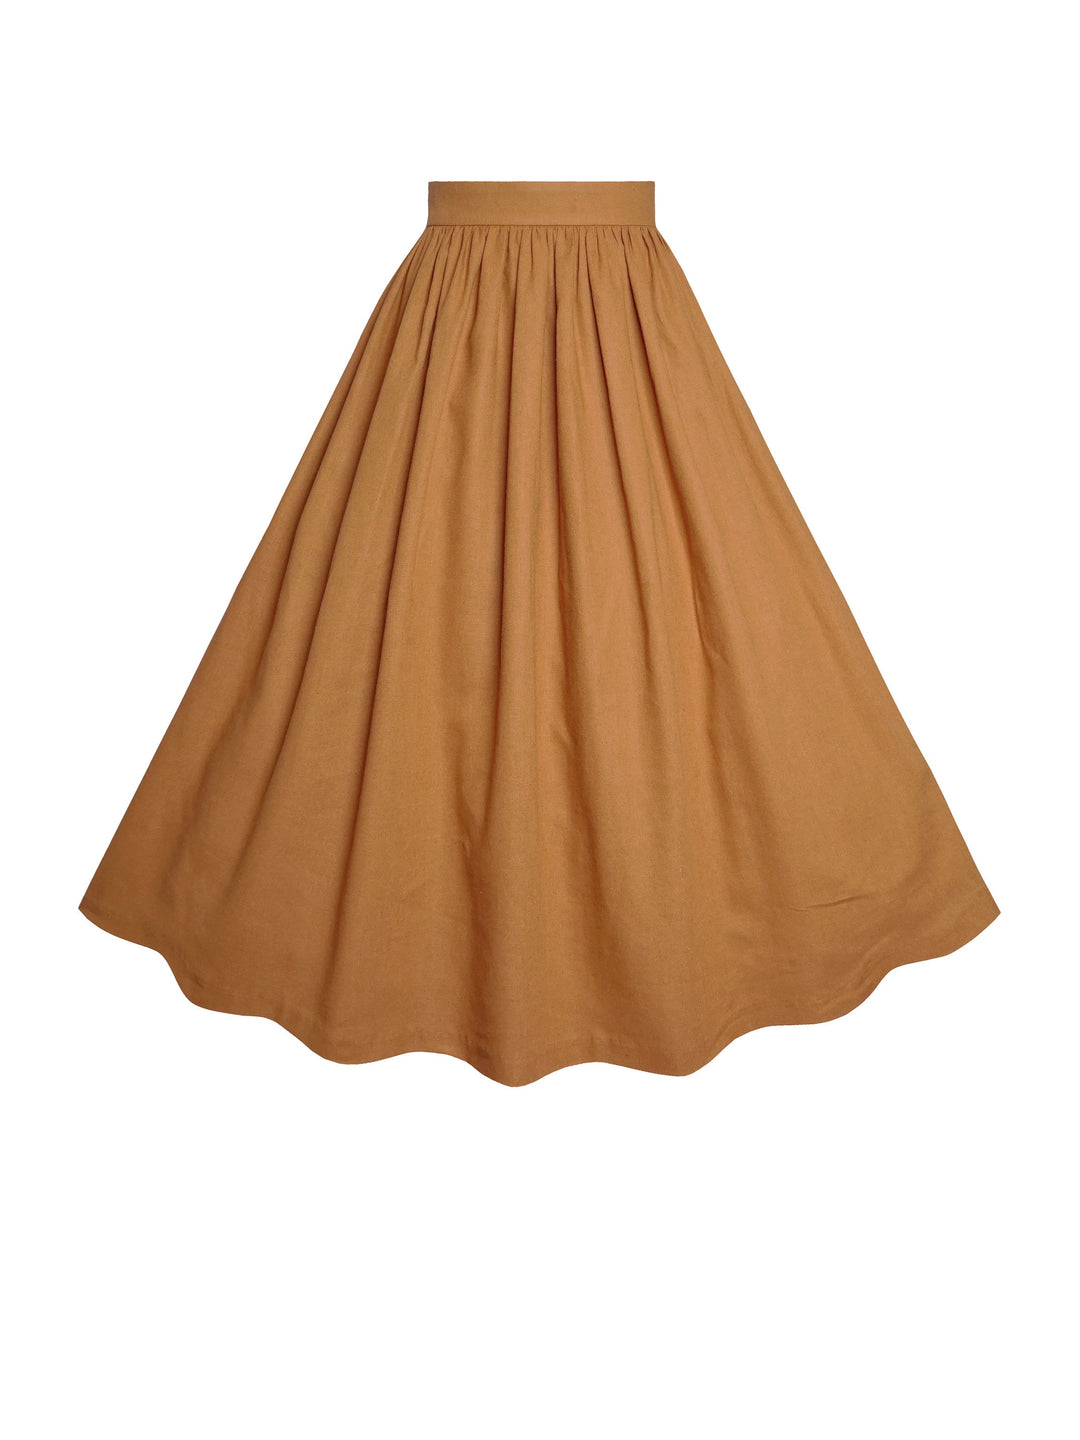 MTO - Lola Skirt in Caramel Linen